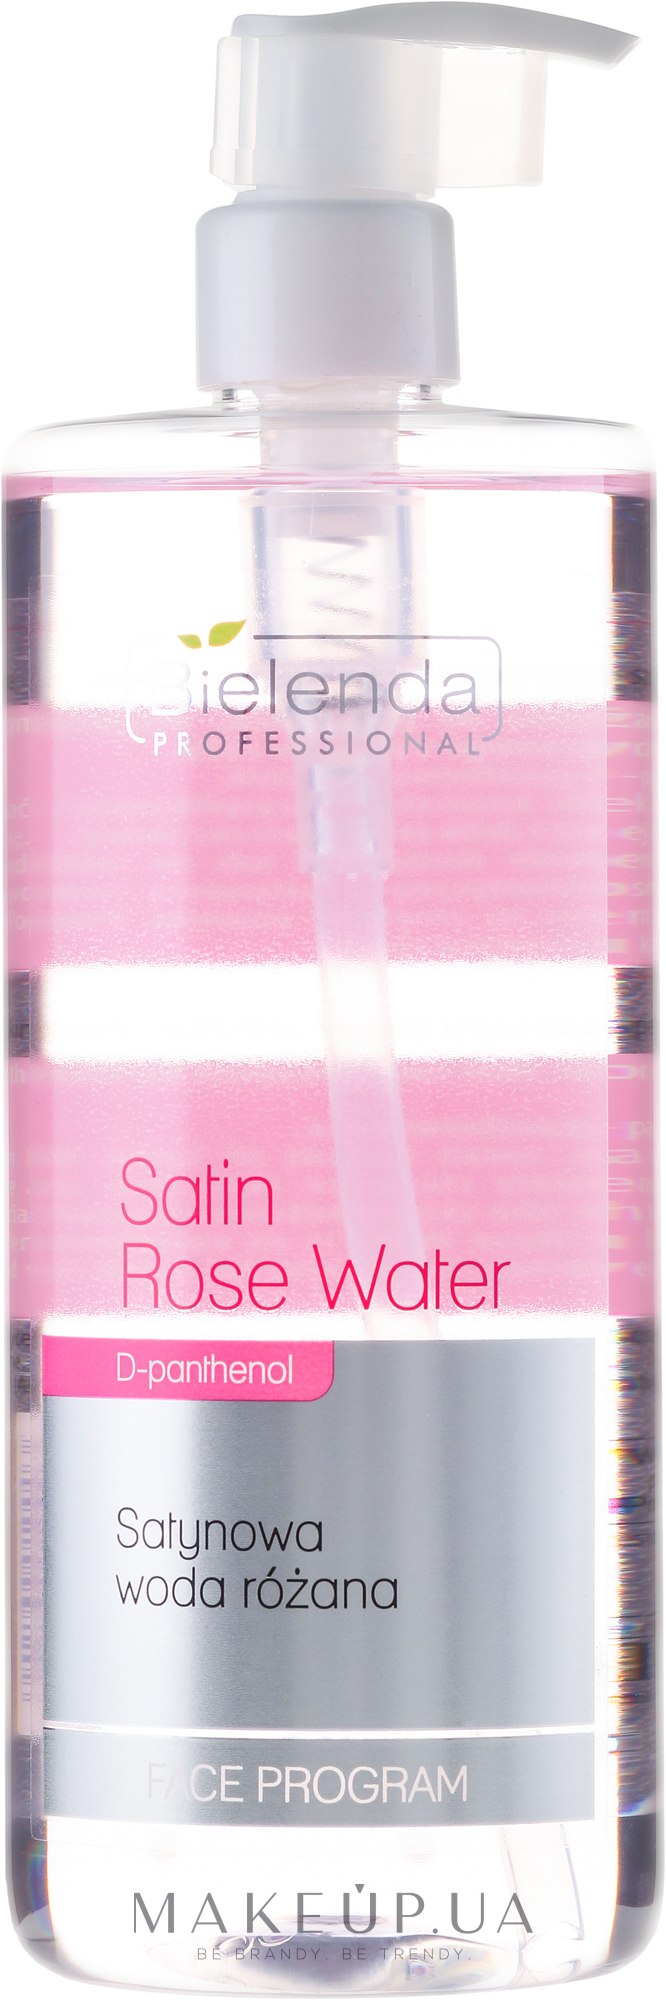 Сатинова трояндова вода - Bielenda Professional Face Program Satin Rose Water — фото 500ml